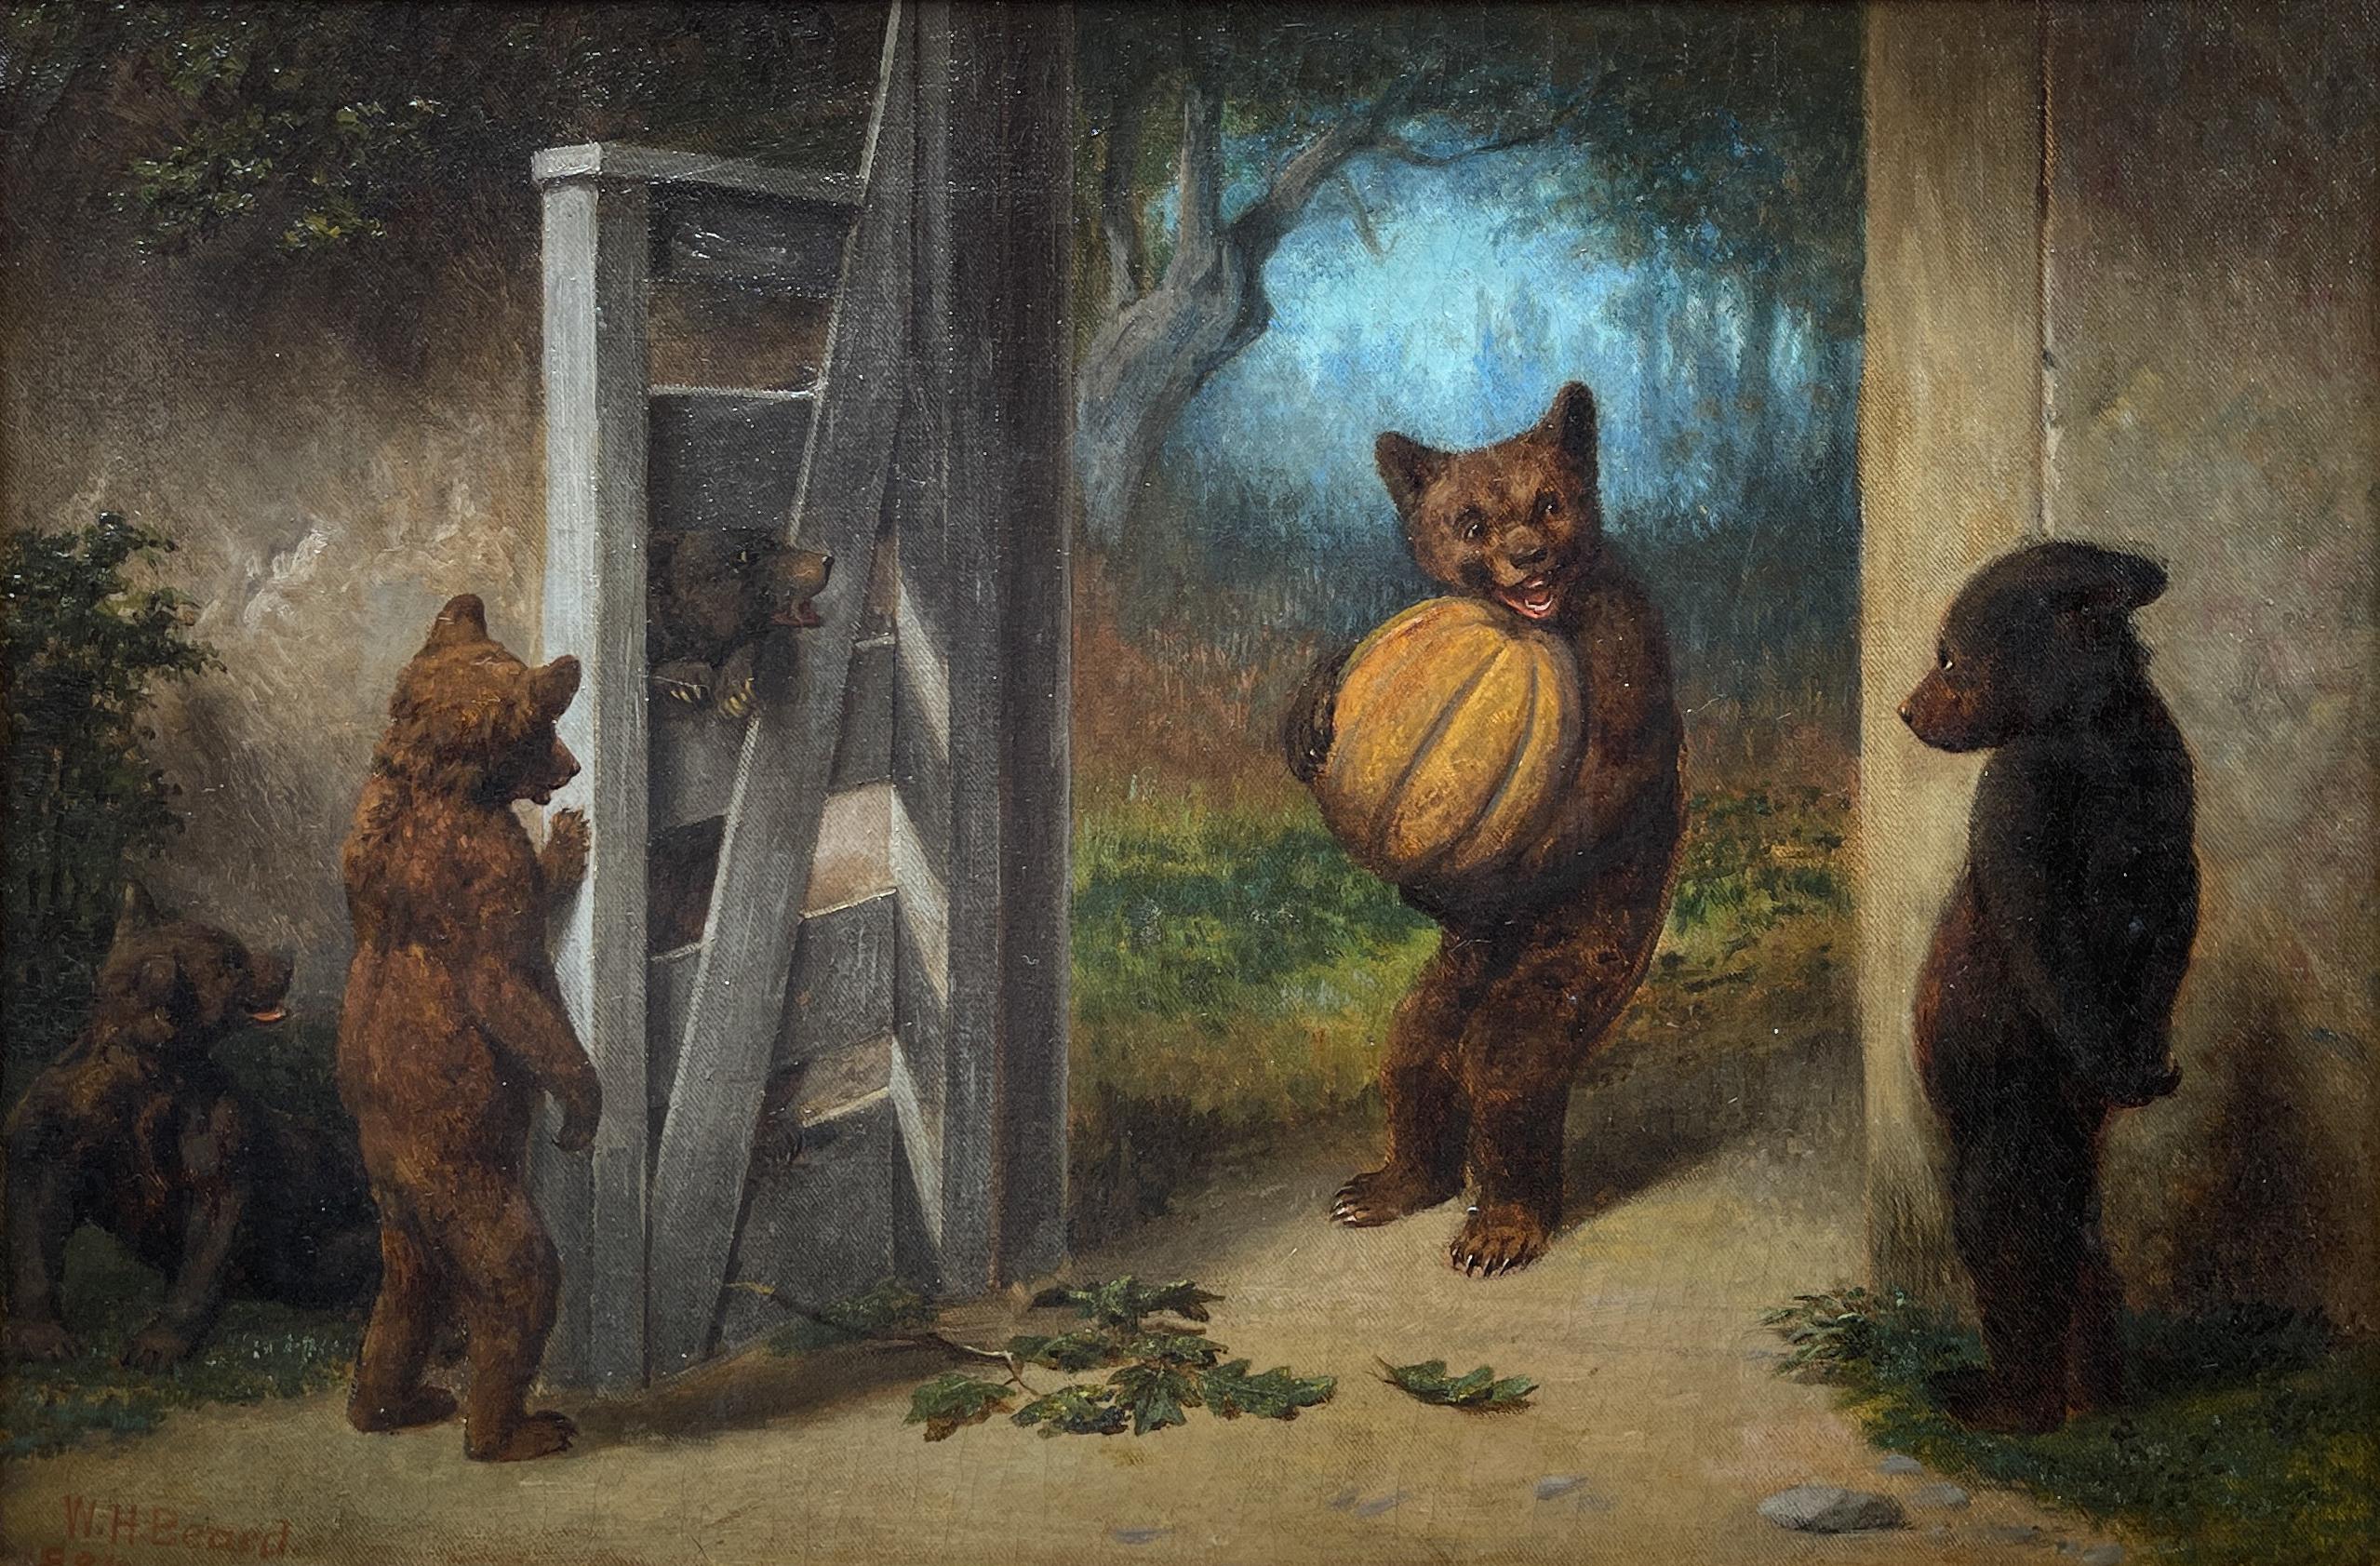 William Holbrook Beard  (1824 - 1900) Landscape Painting - "Gwine to Eat it All Myself" William Holbrook Beard, Bears, Animals, Genre Scene